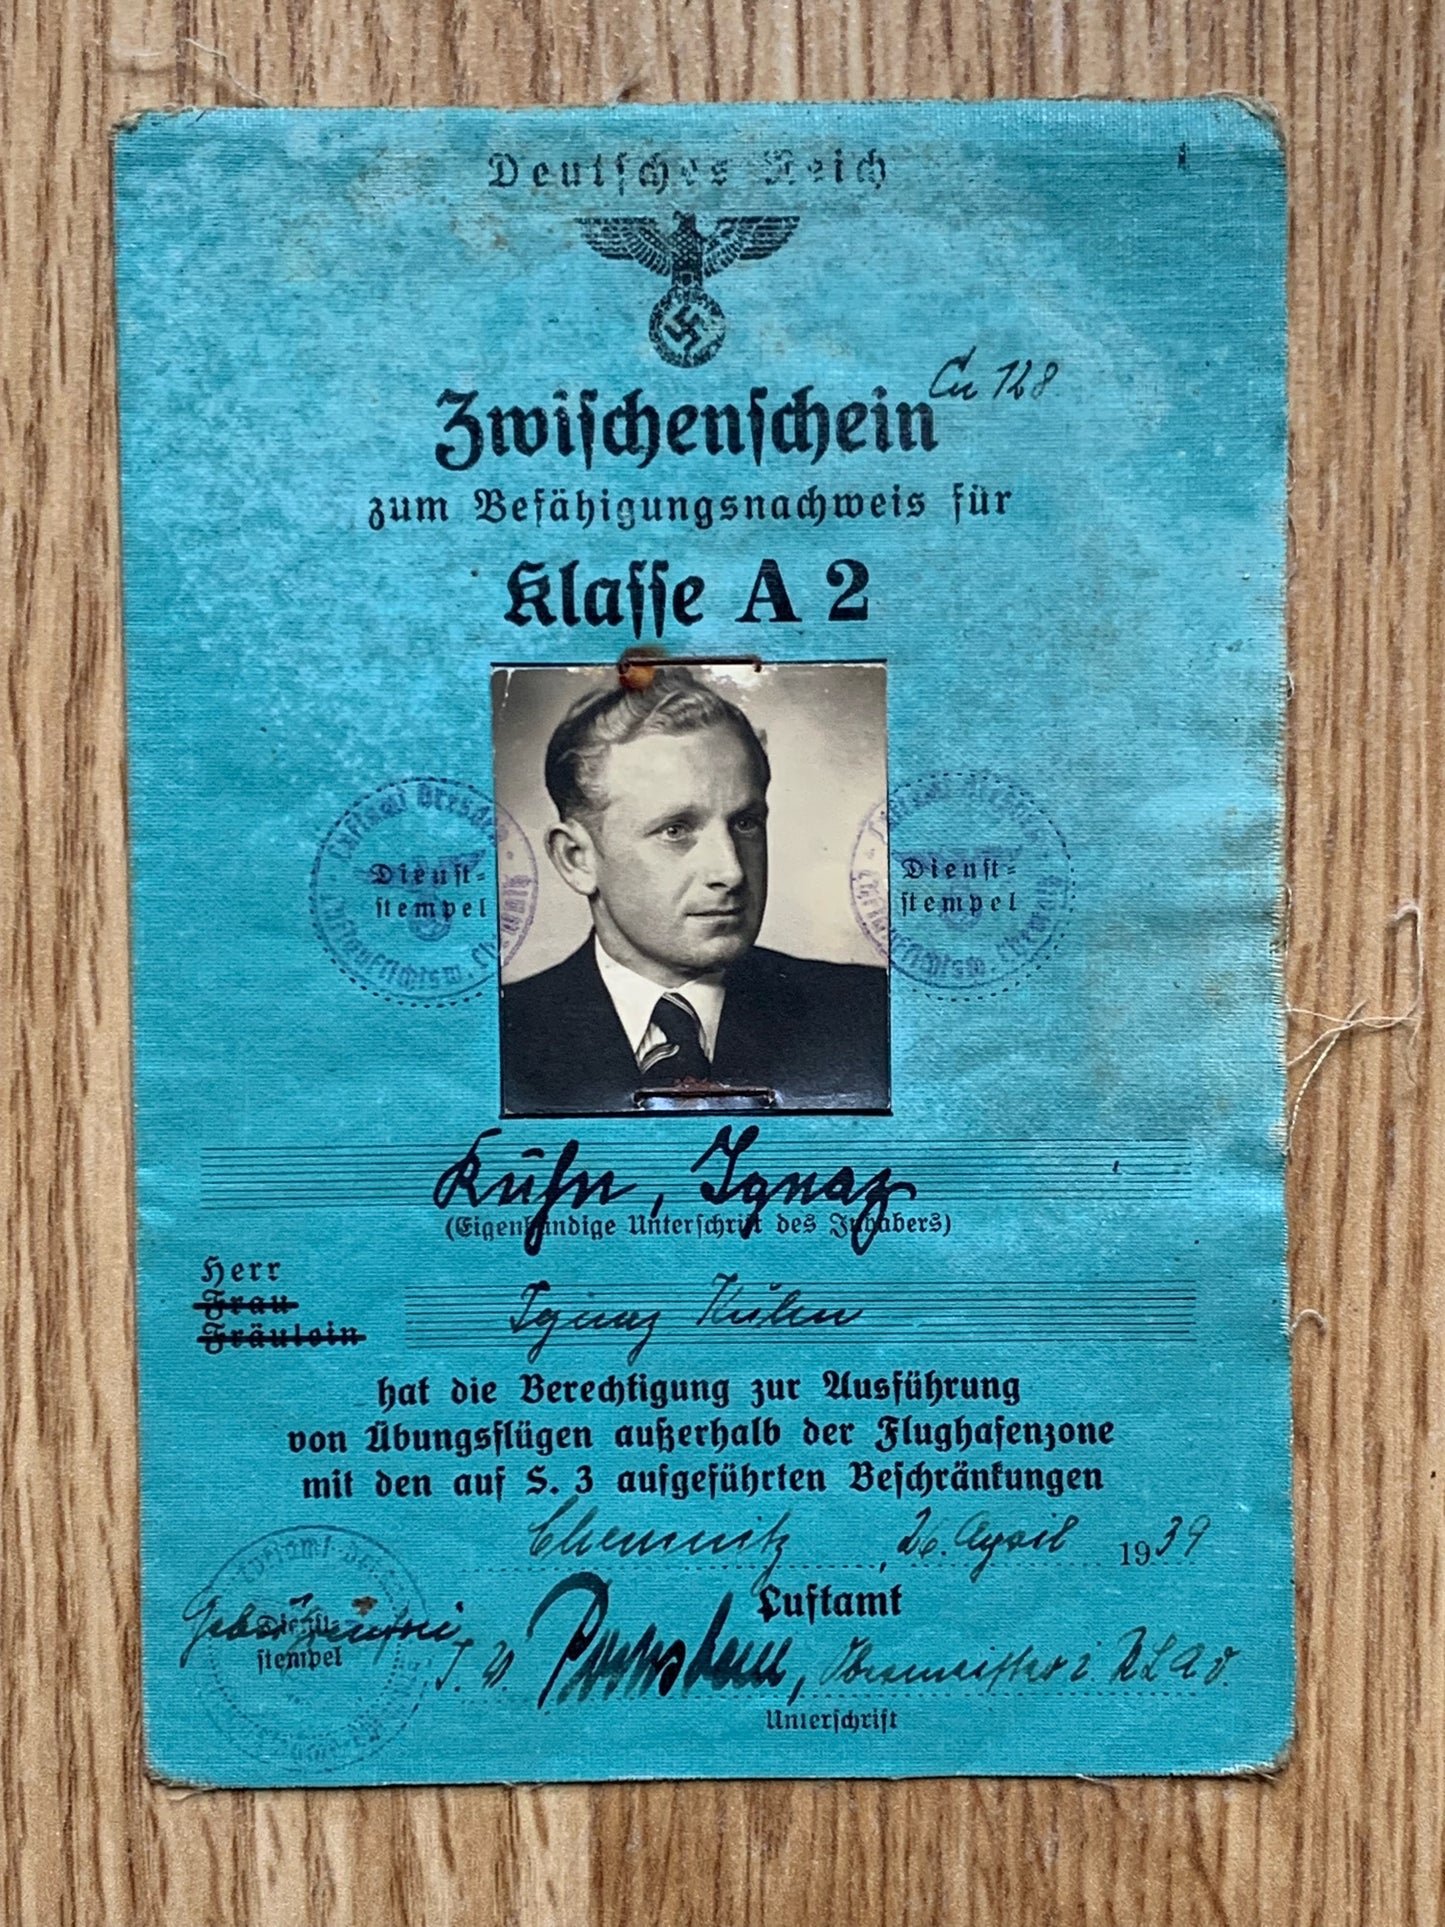 WW2 Civilian German Pilots license